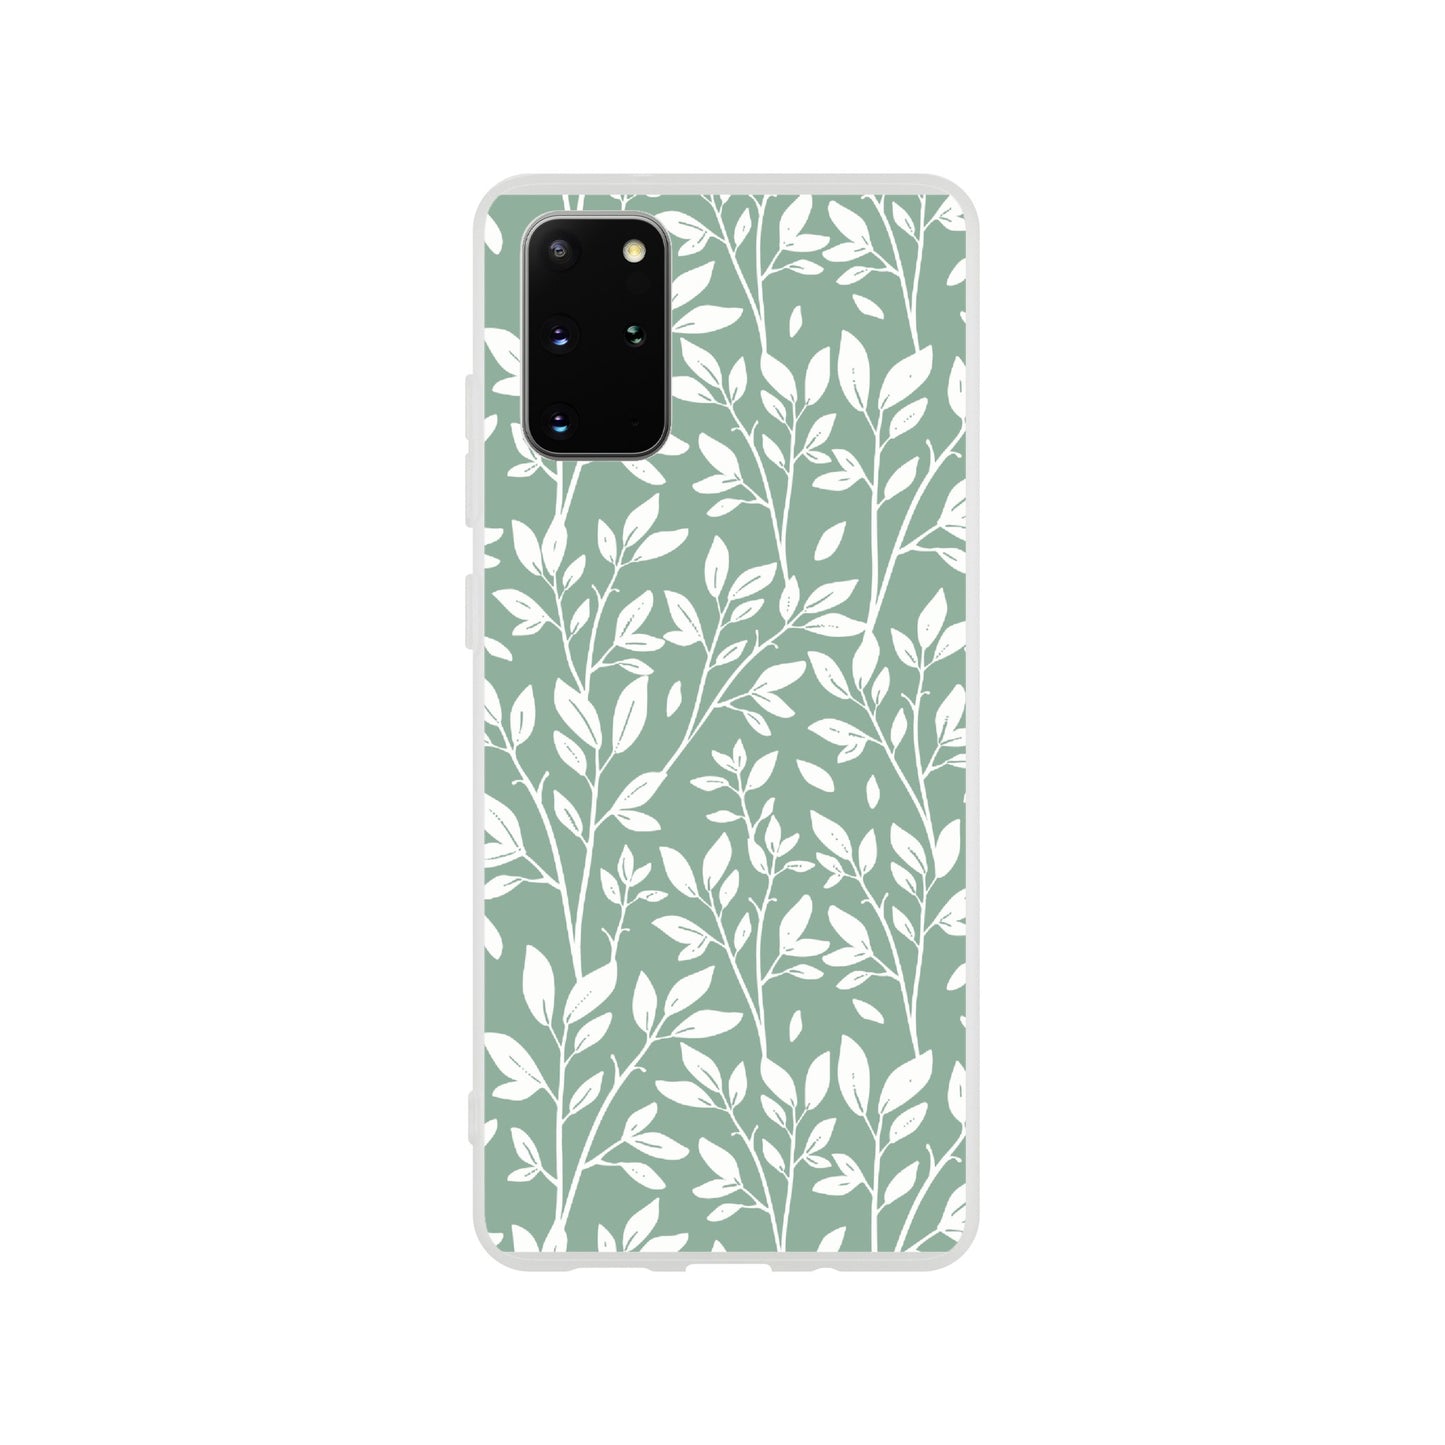 Restful Green Botanical Leaves Phone Case - Stylish & Protective